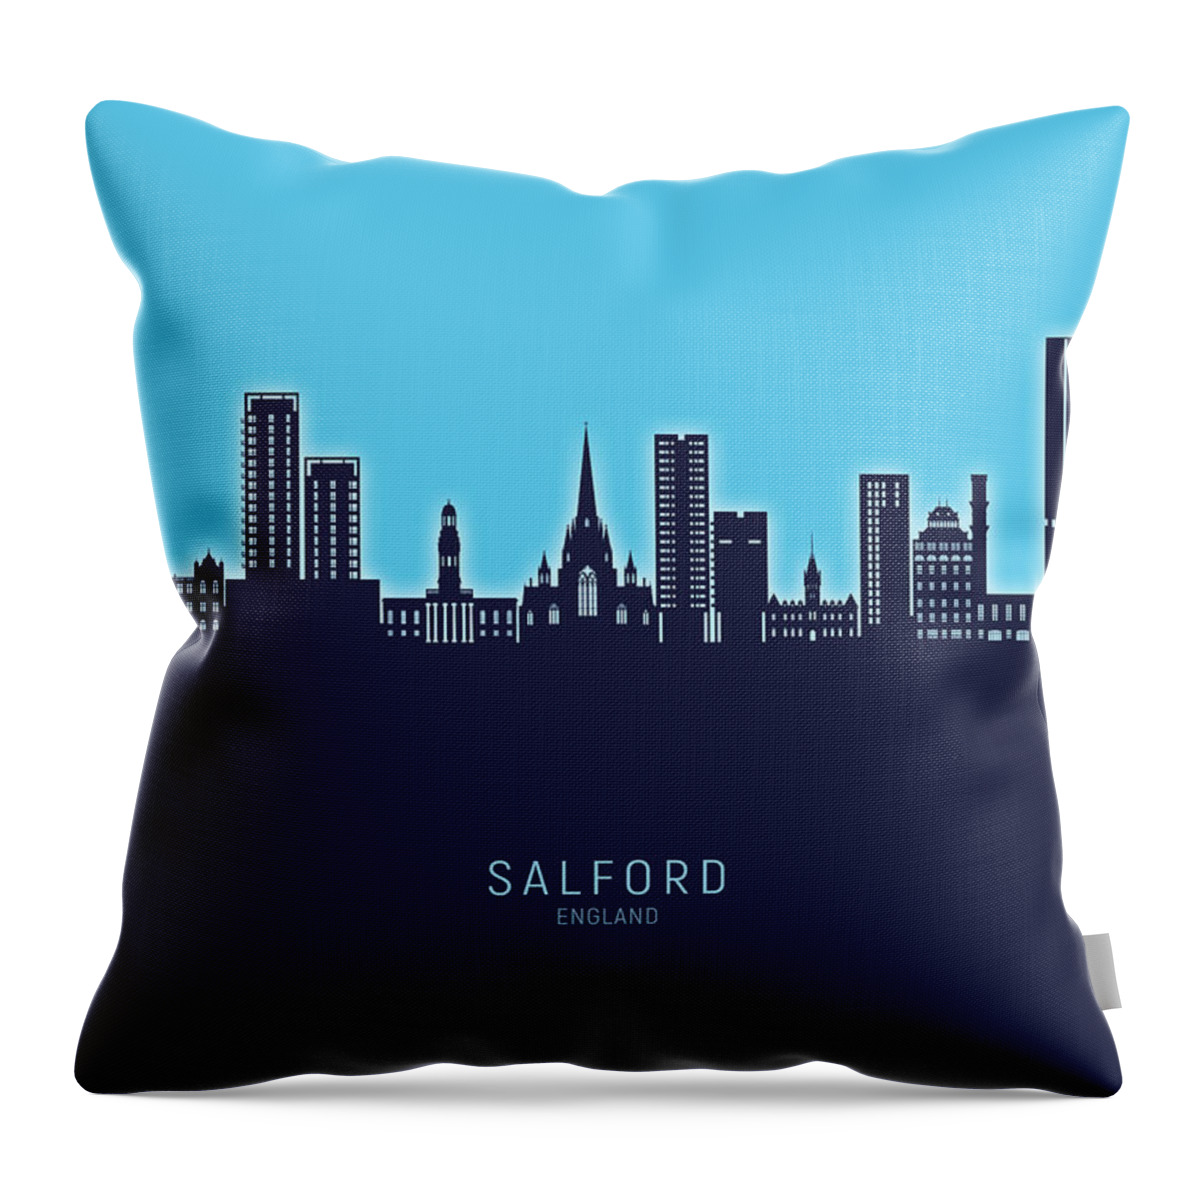 Salford Throw Pillow featuring the digital art Salford England Skyline #66 by Michael Tompsett